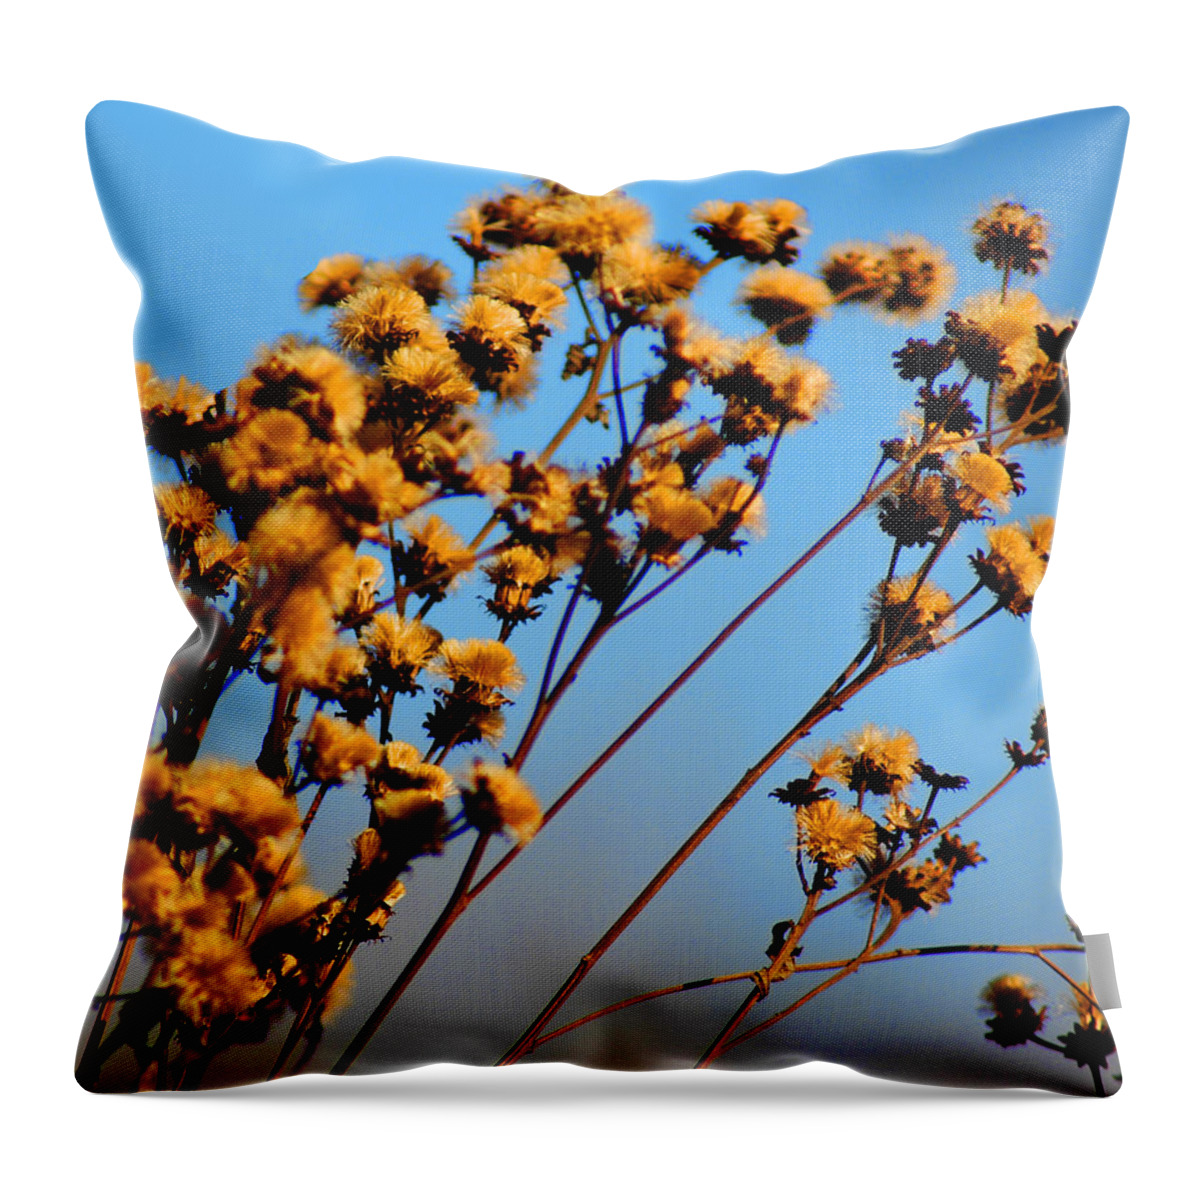 Usa Throw Pillow featuring the photograph Golden plants in the sun by LeeAnn McLaneGoetz McLaneGoetzStudioLLCcom